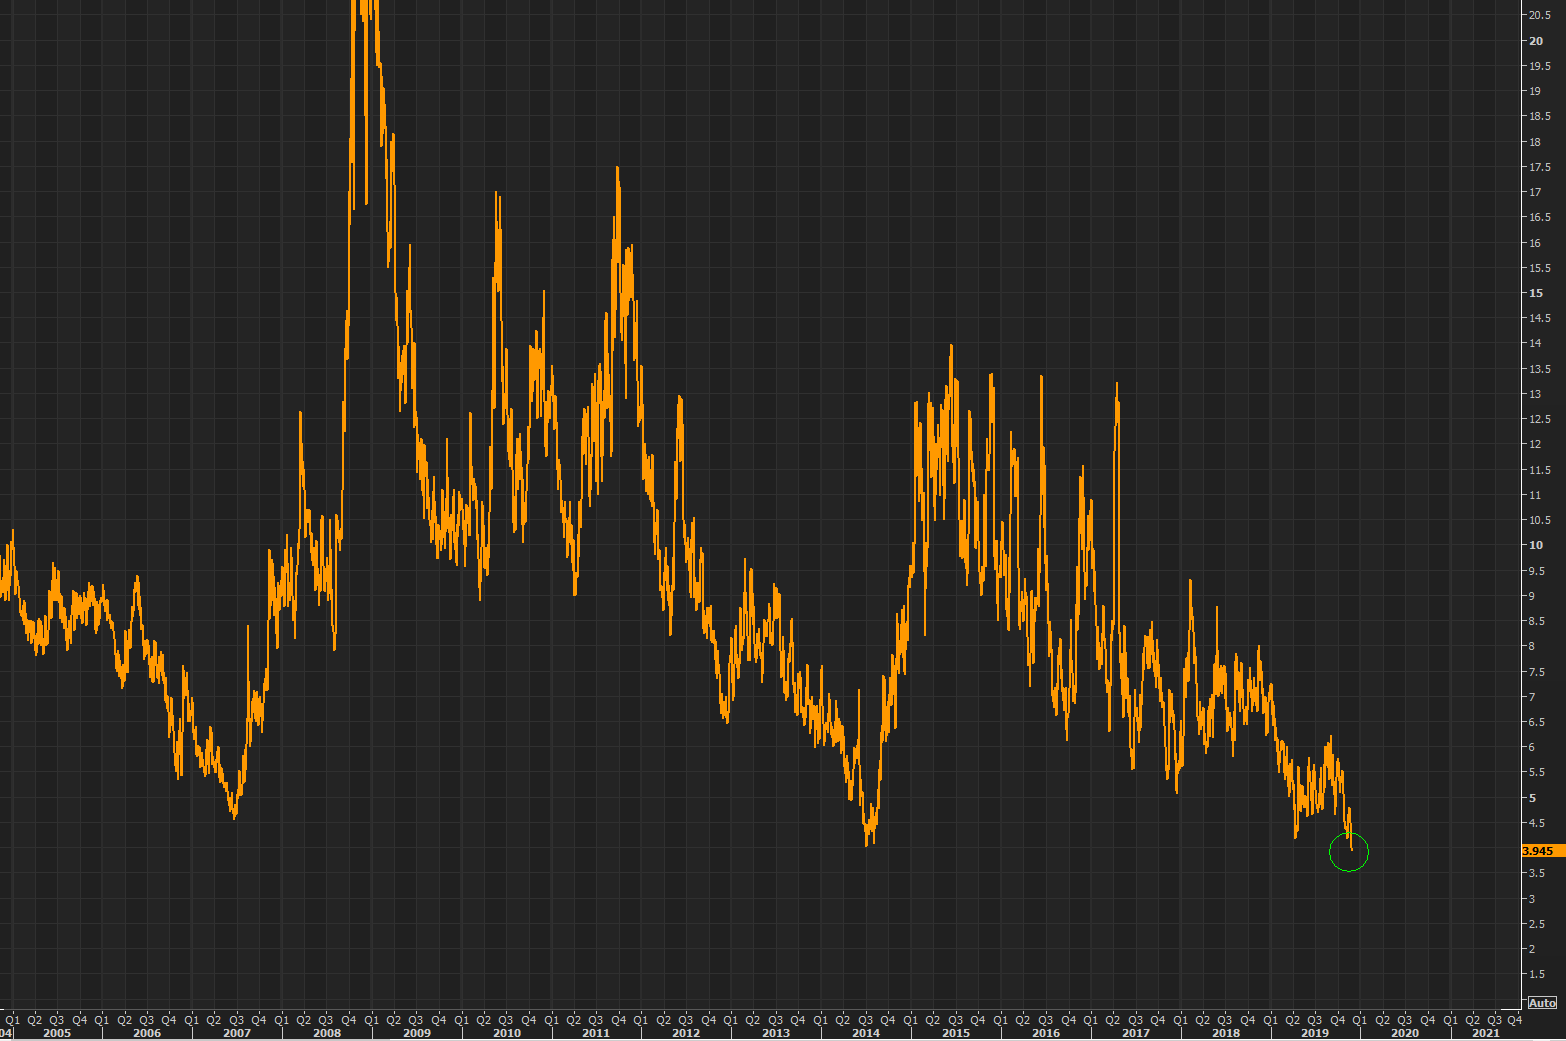 New day new EURUSD volatility lows